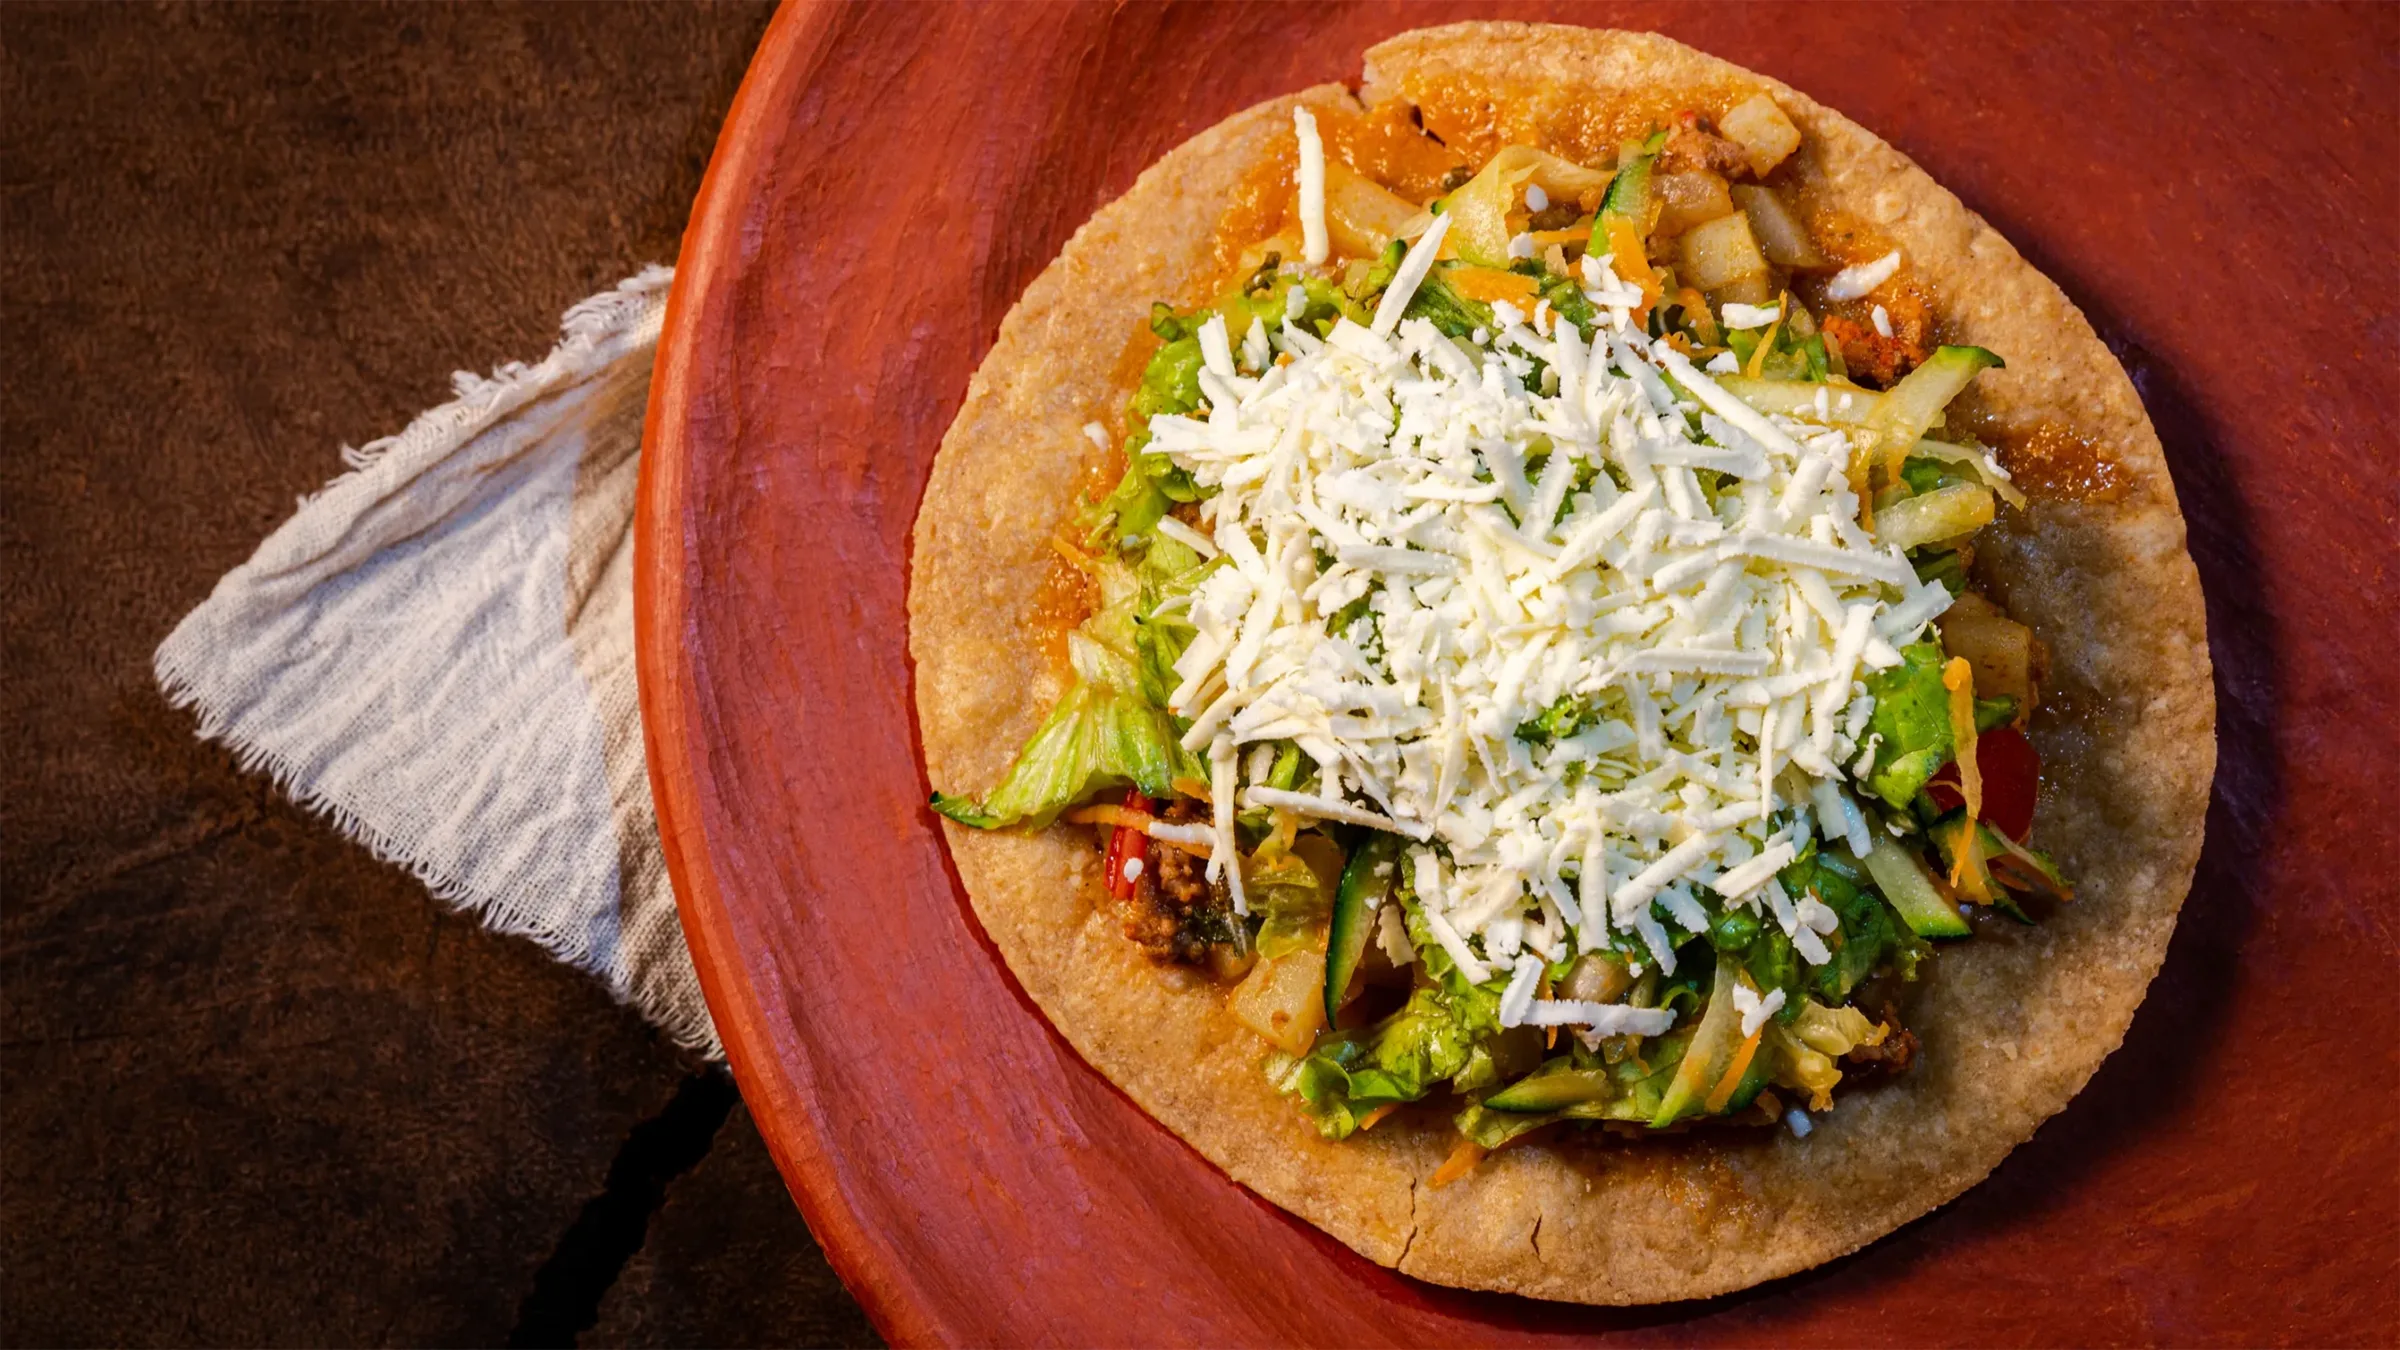 Honduran recipe to prepare Enchiladas